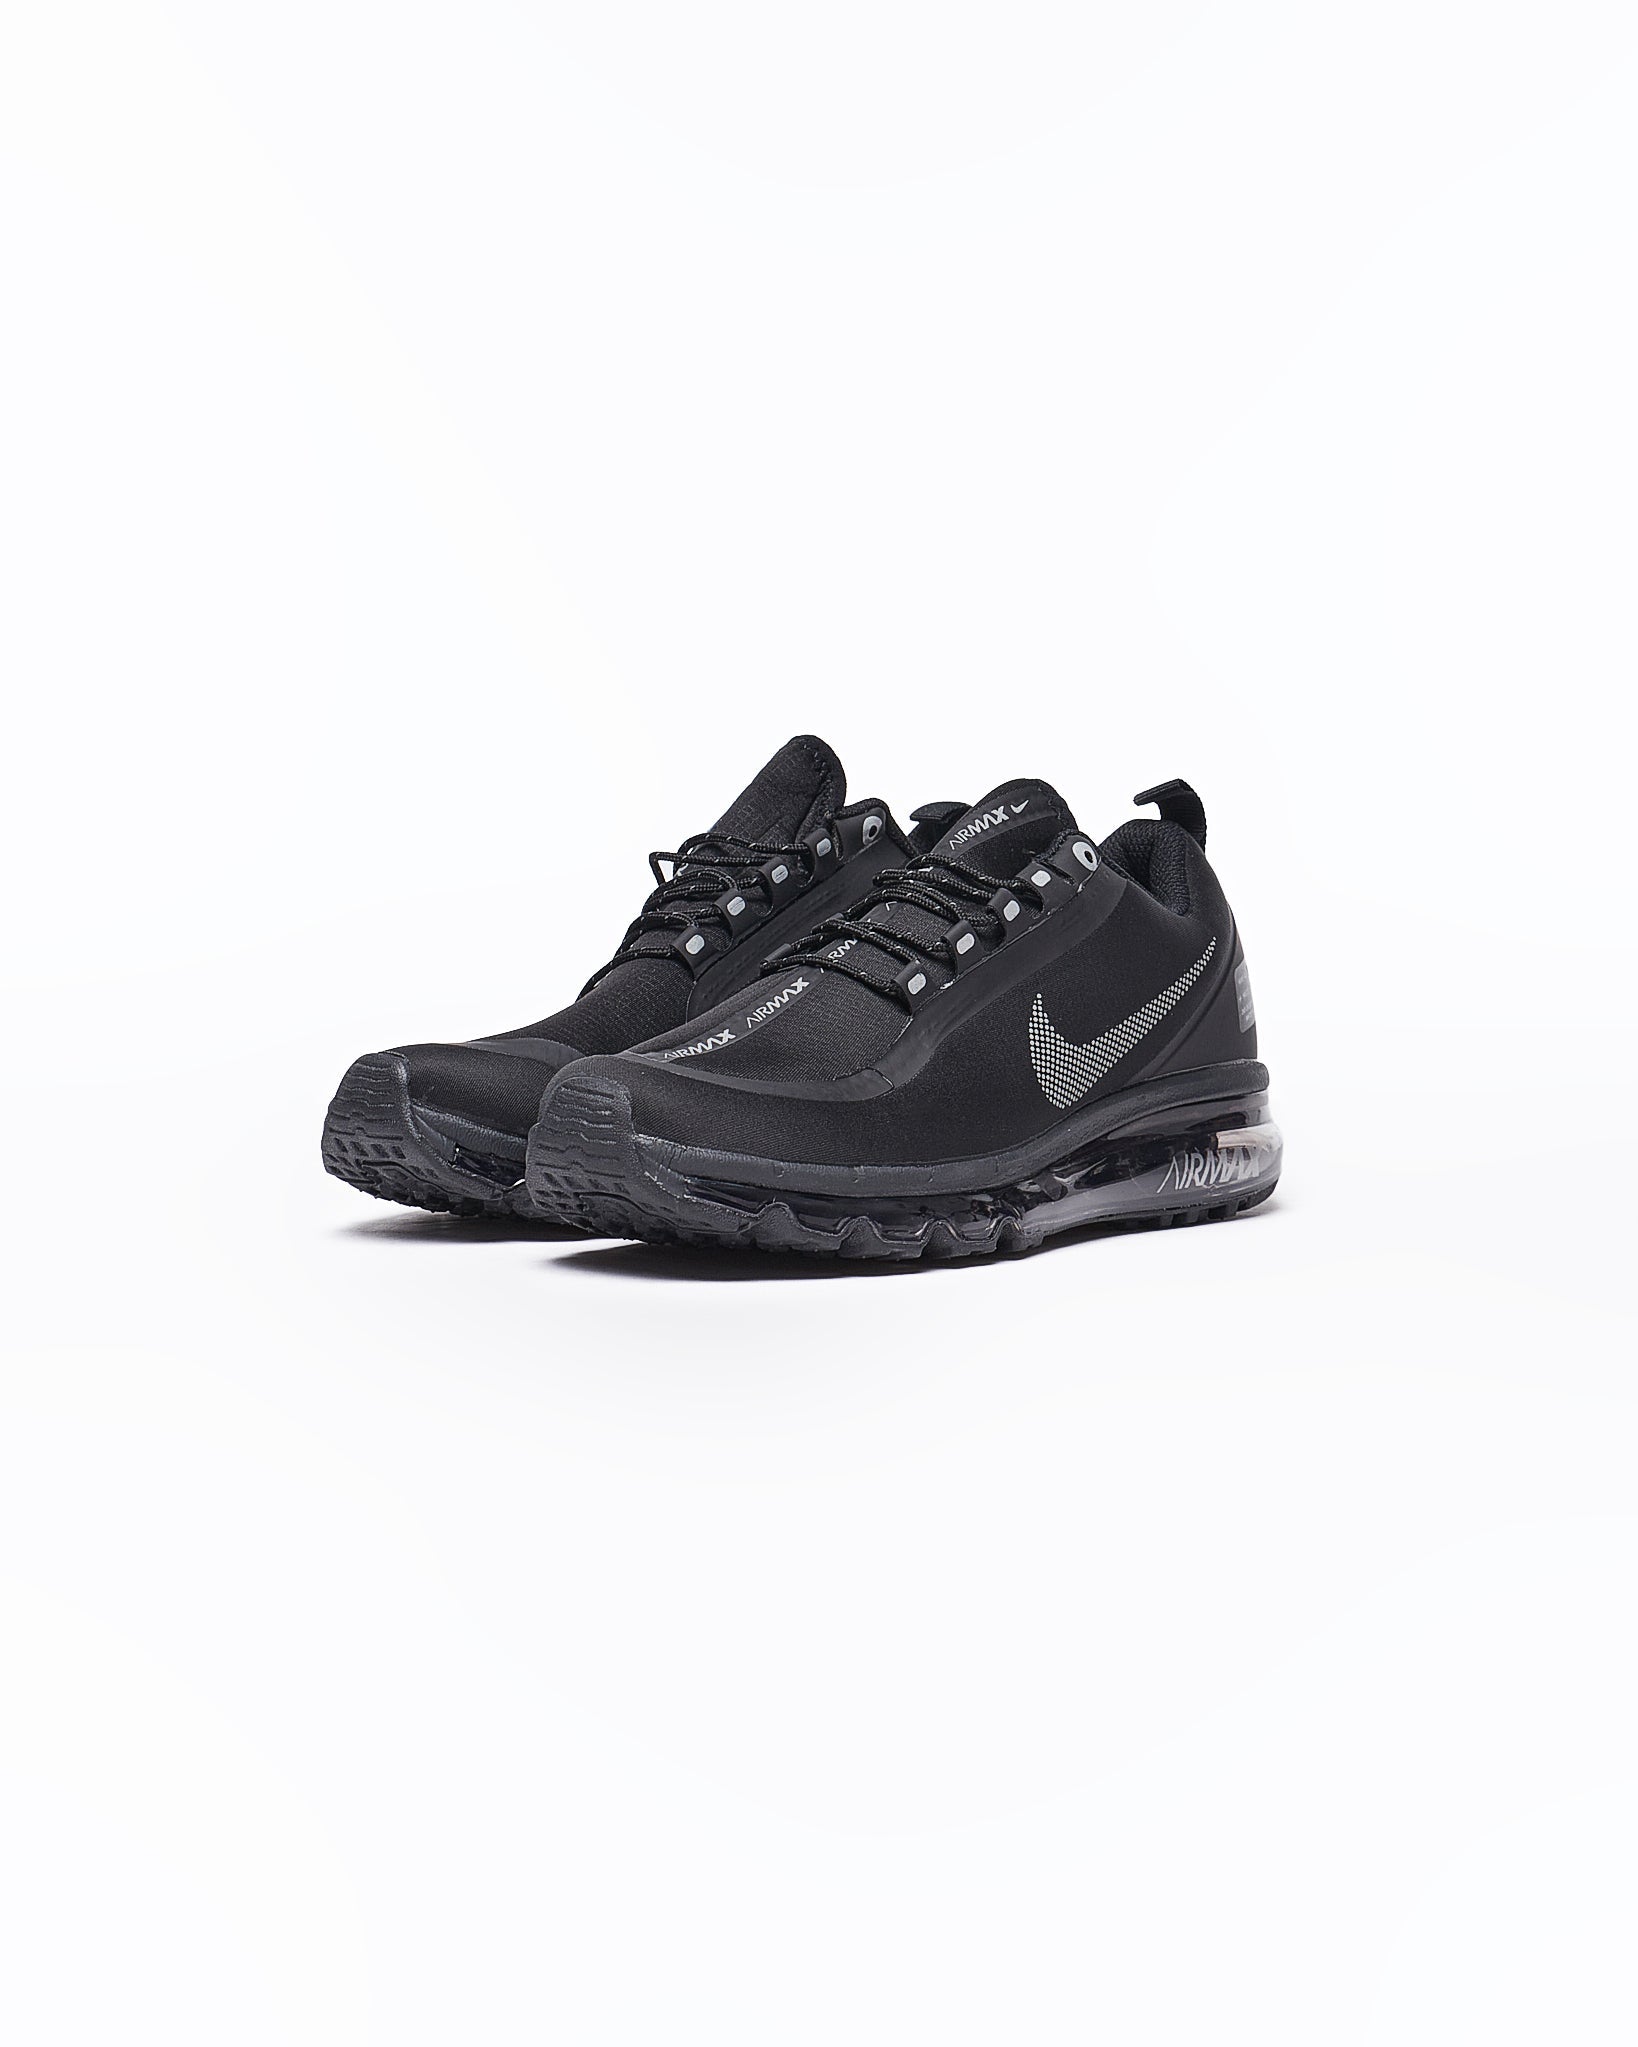 MOI OUTFIT-NIK Air Max Men Black Runners Shoes 39.90